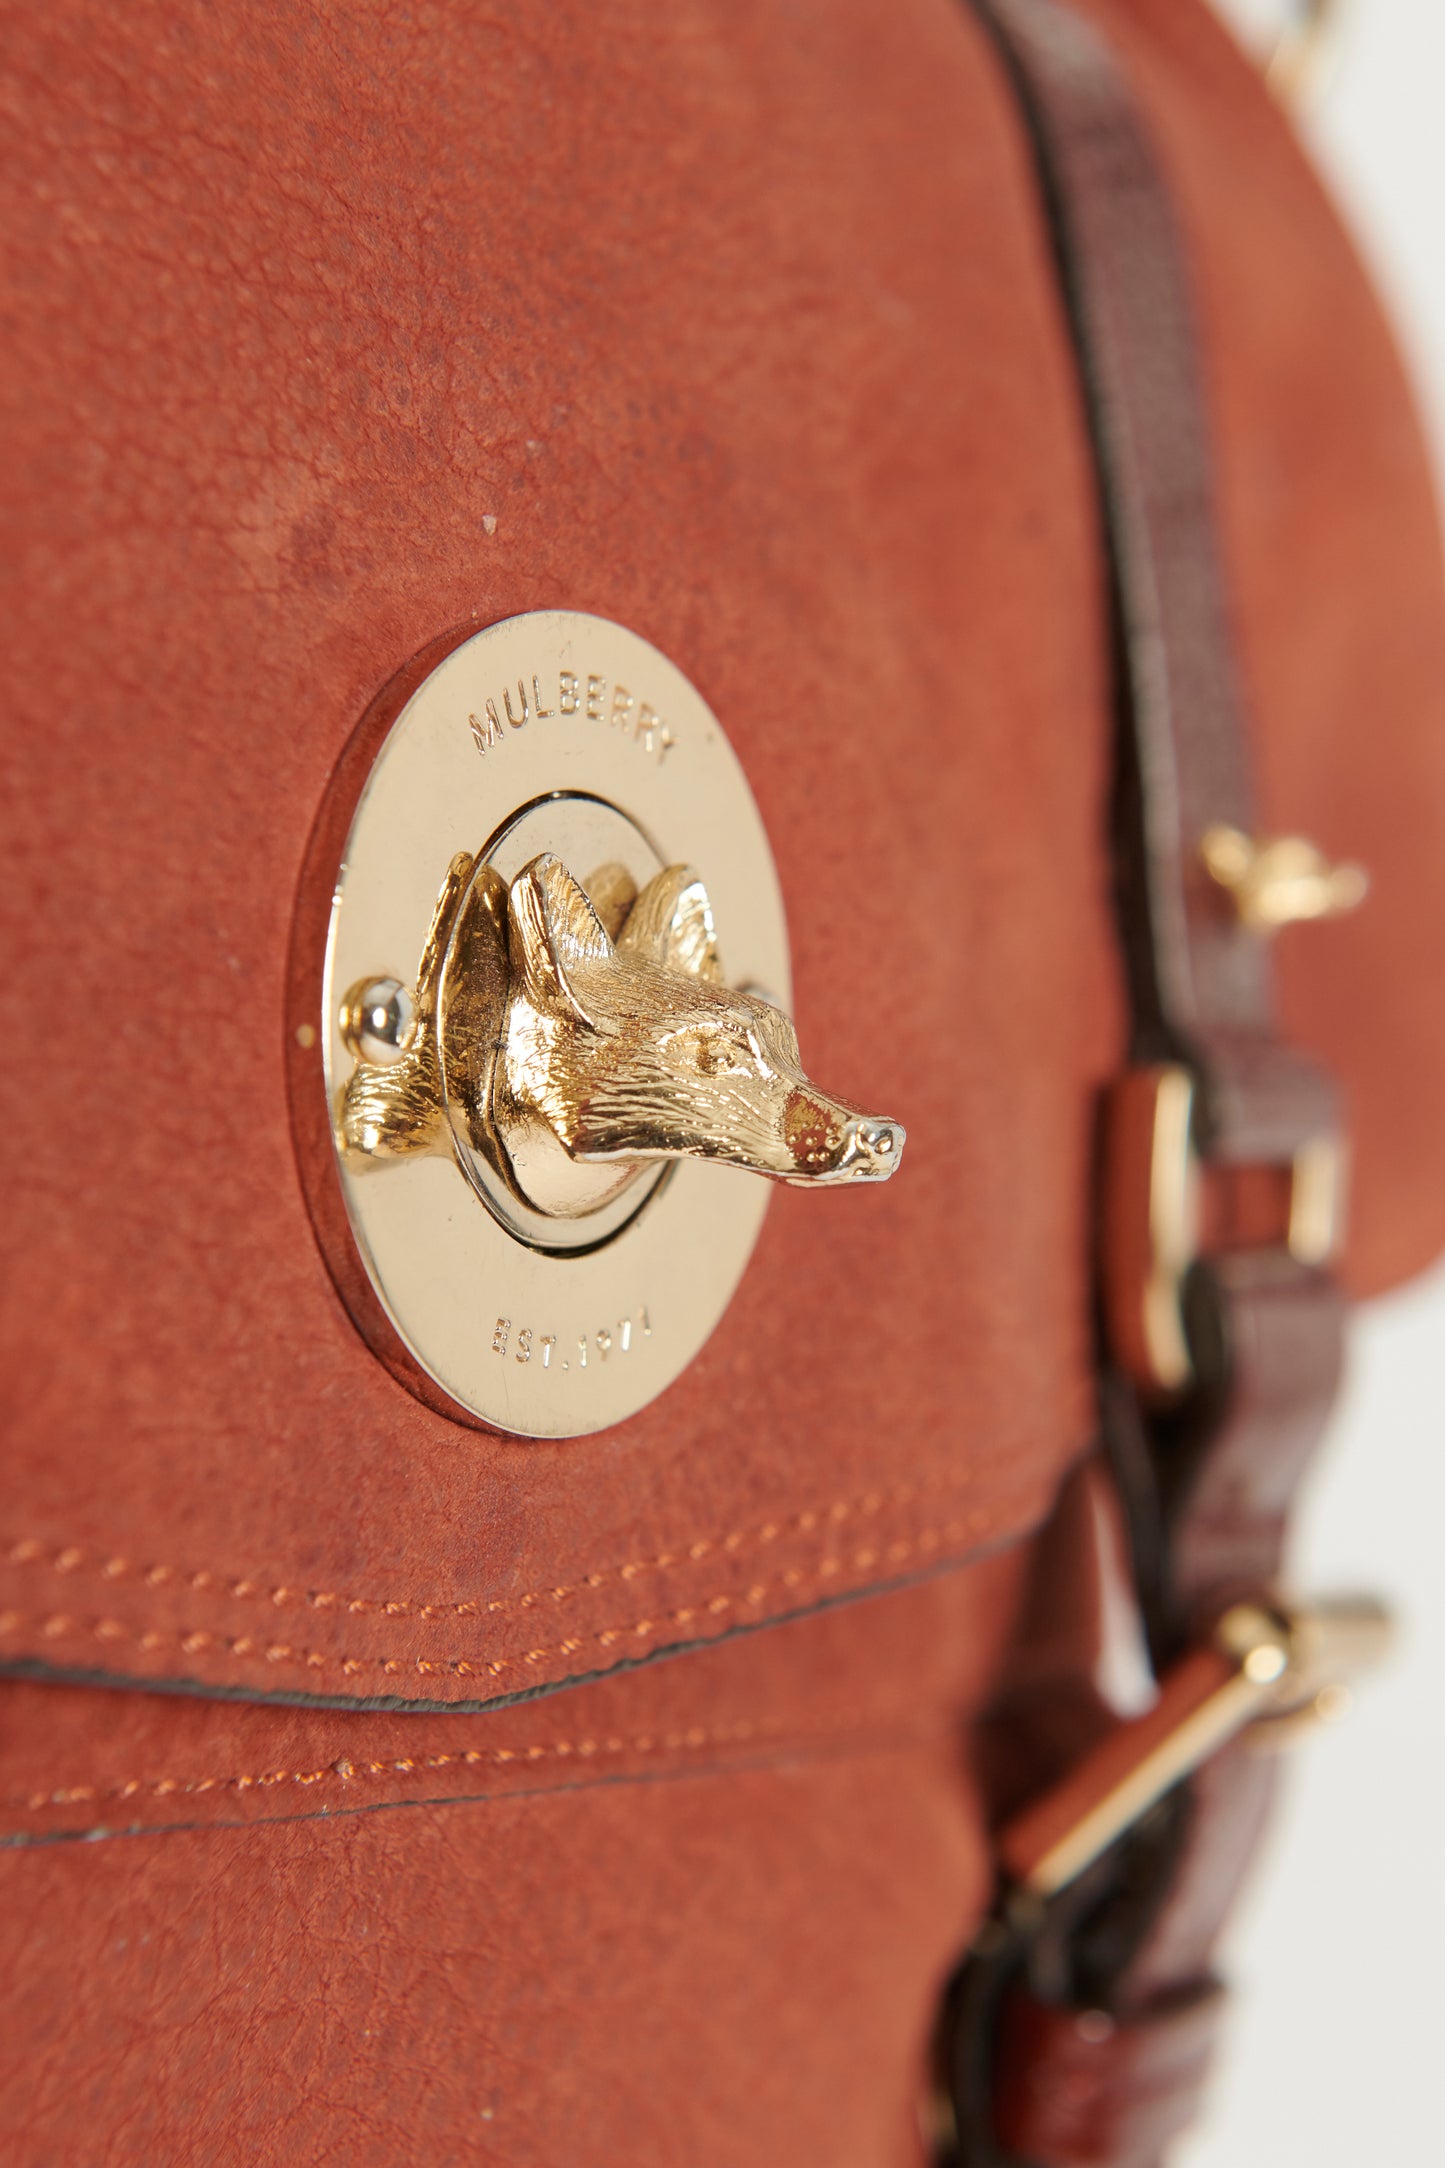 Terracota Leather Preowned Fox Bag